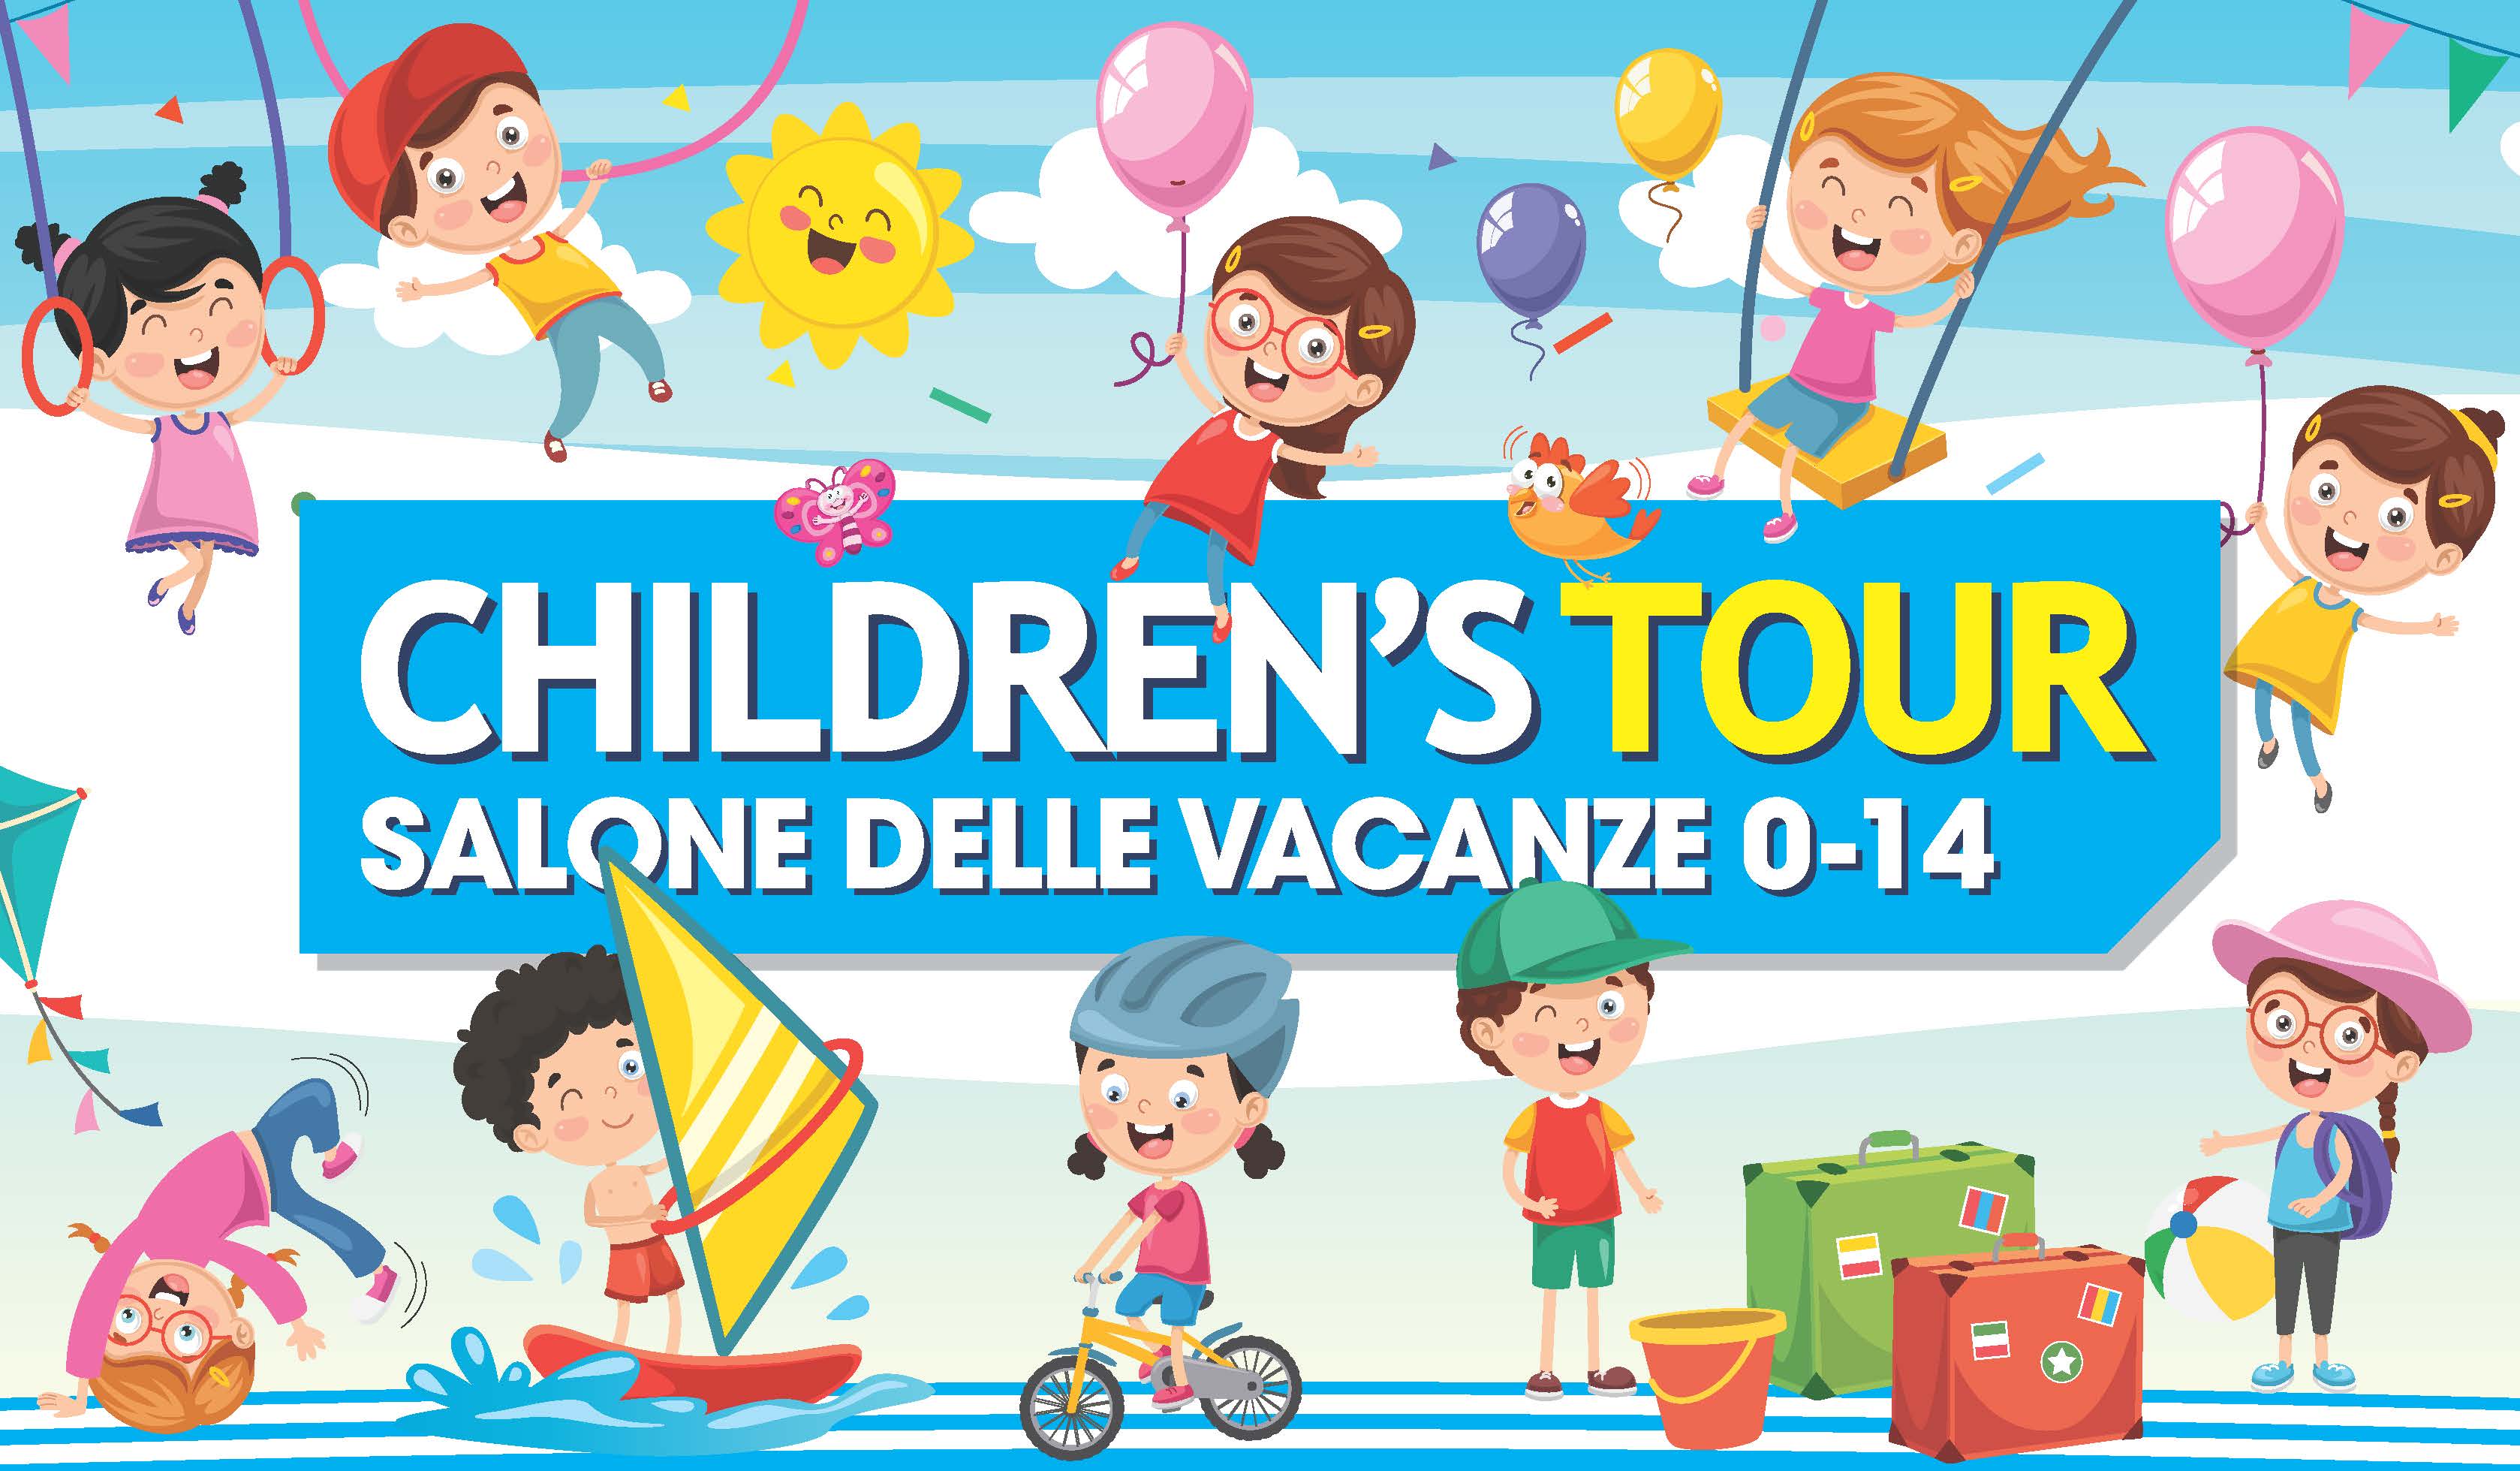 CHILDREN'S TOUR - MODENA FIERE